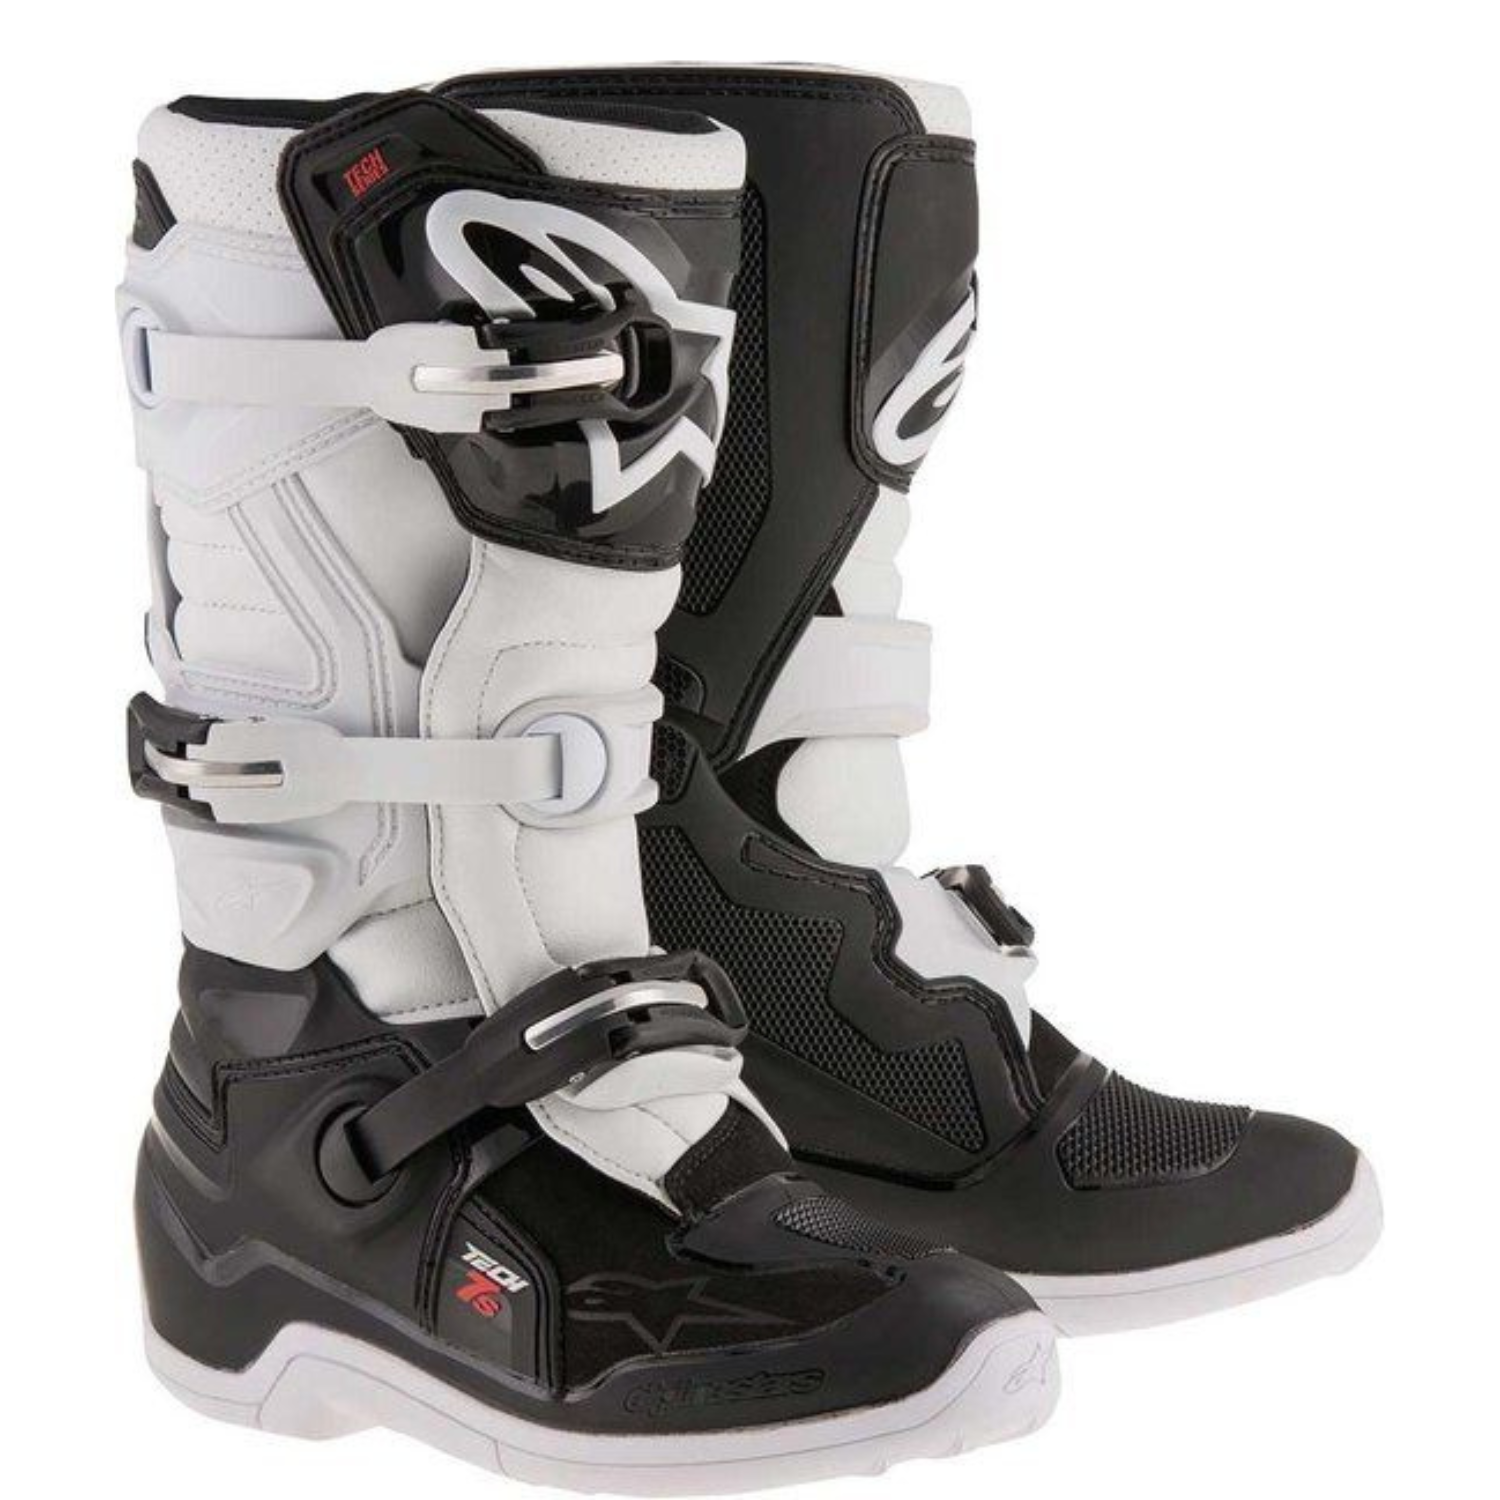 Image of Alpinestars Tech 7 S Black White Boots Größe US 4